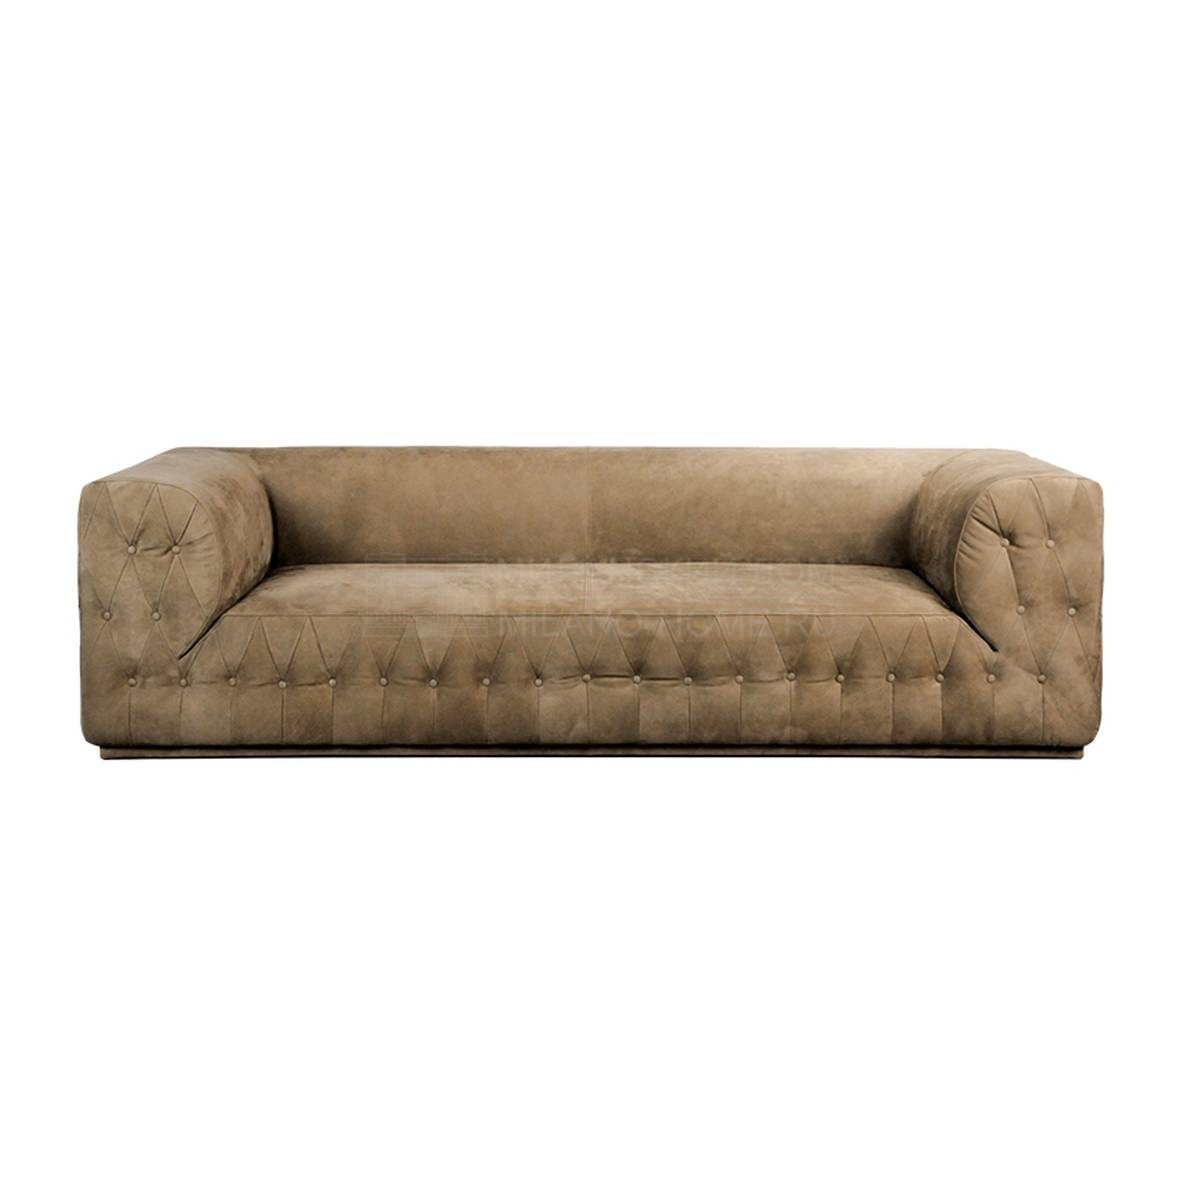 Прямой диван Mambo Capitonne sofa из Италии фабрики PAOLO CASTELLI